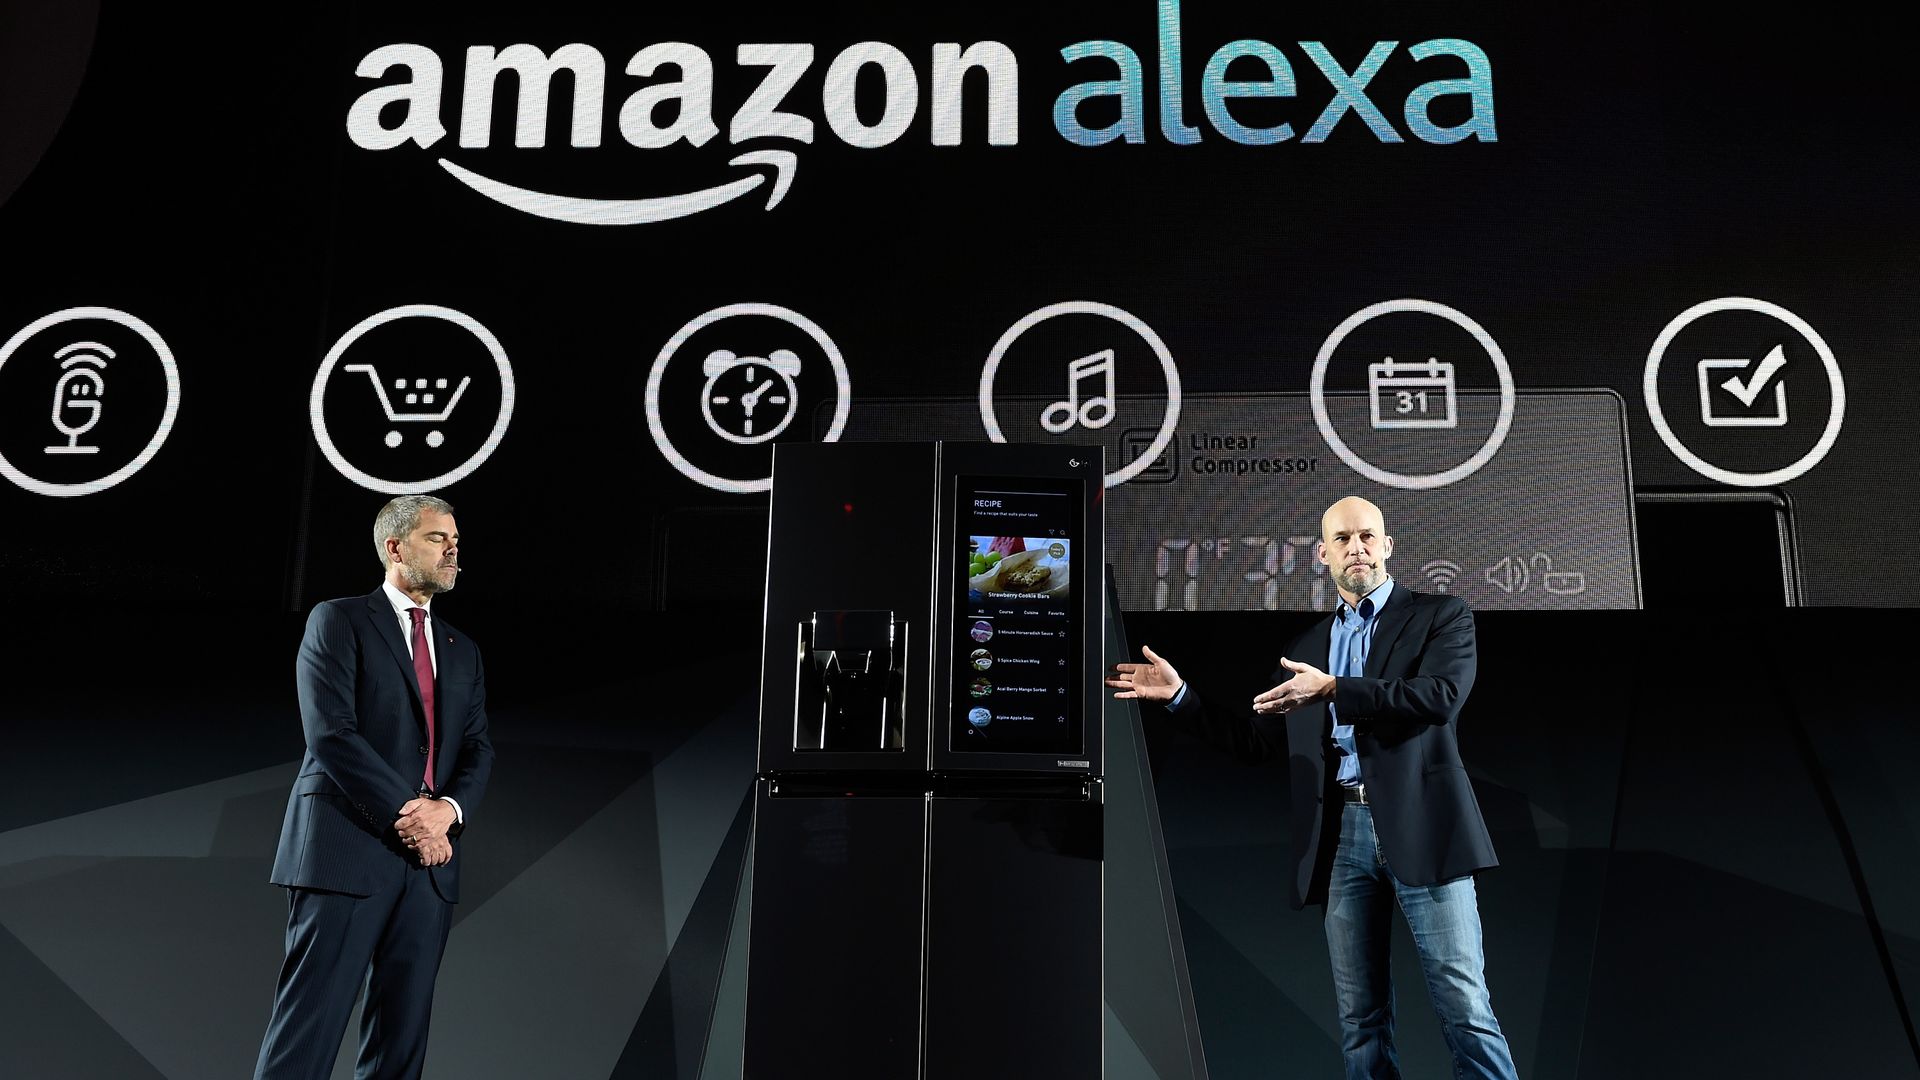 Amazon executives on stage introduce new Alexa products 